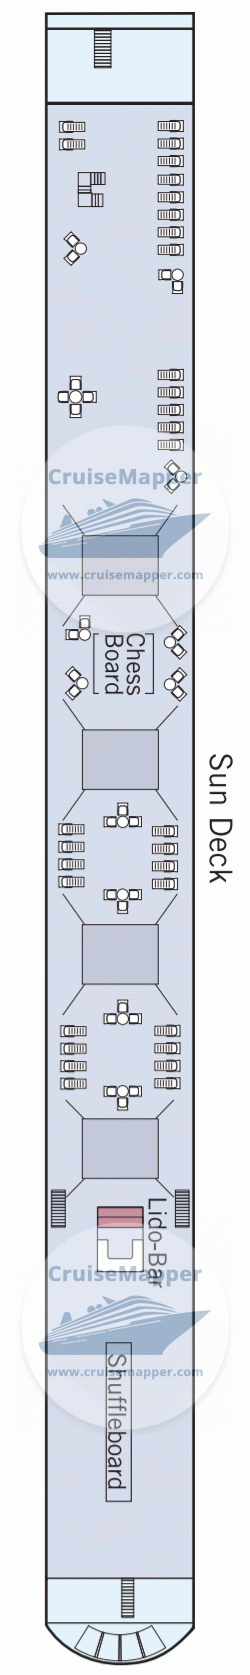 MS Amadeus Silver III Deck 04 - Sun